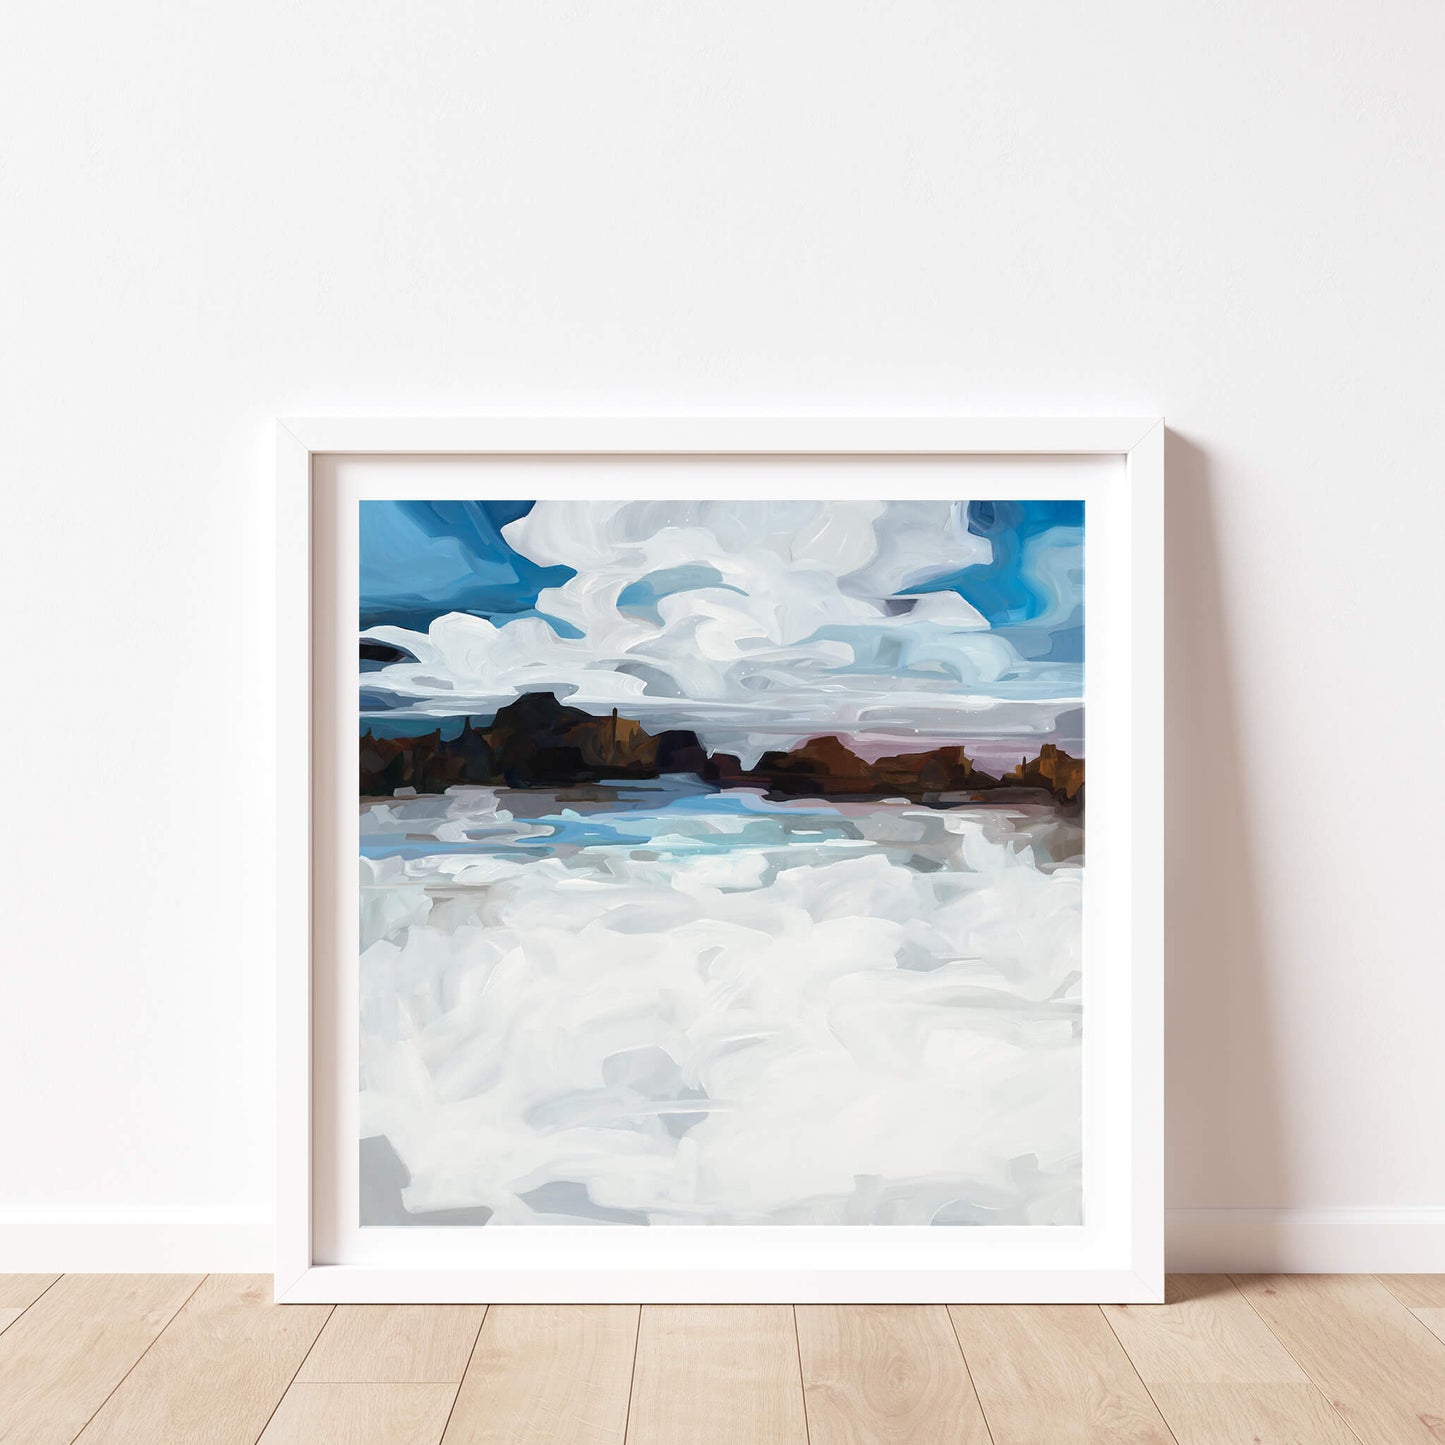 A framed fine art print of Winterlake an abstract winter landscape by Canadian artist Susannah Bleasby